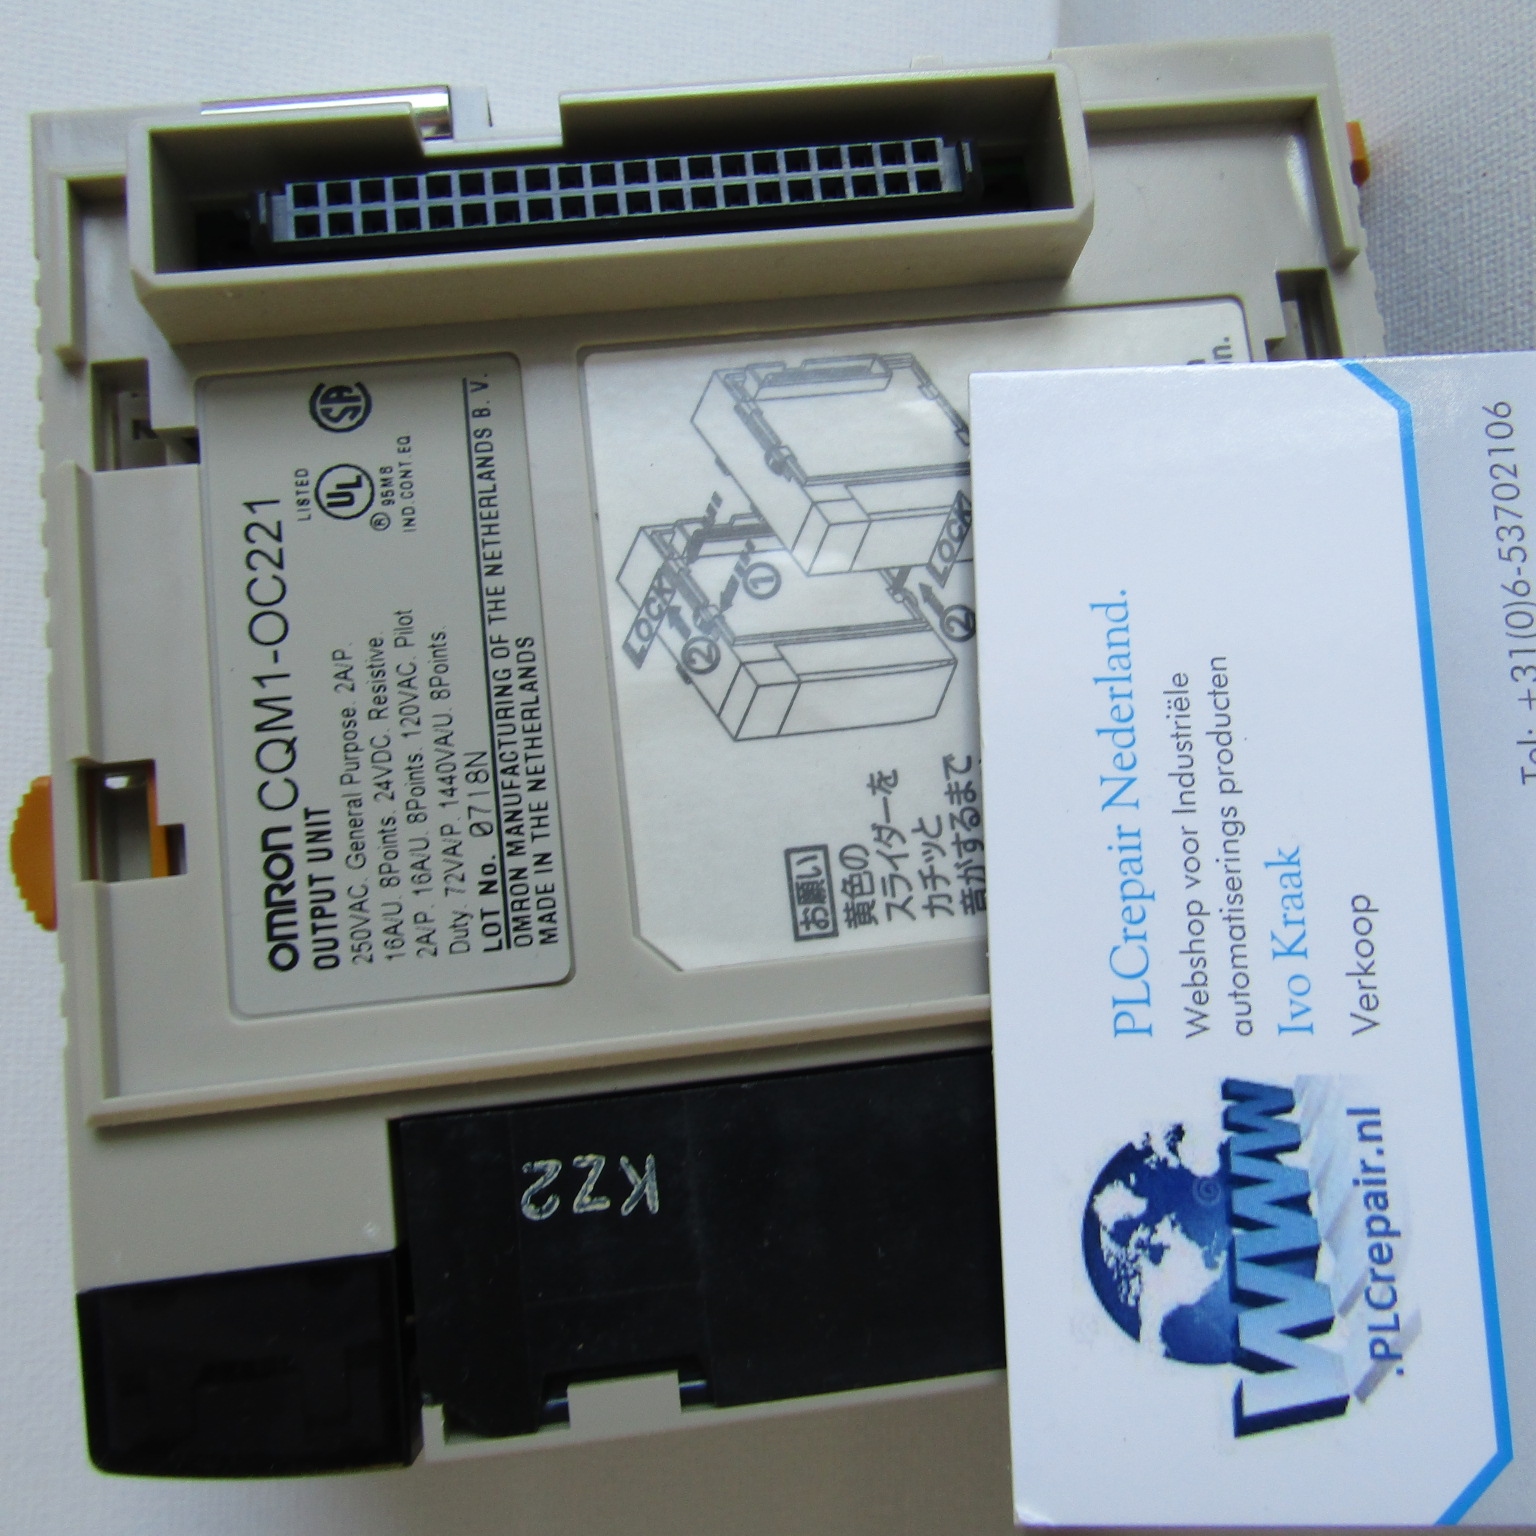 CQM1-OC221 Output unit omron plc.